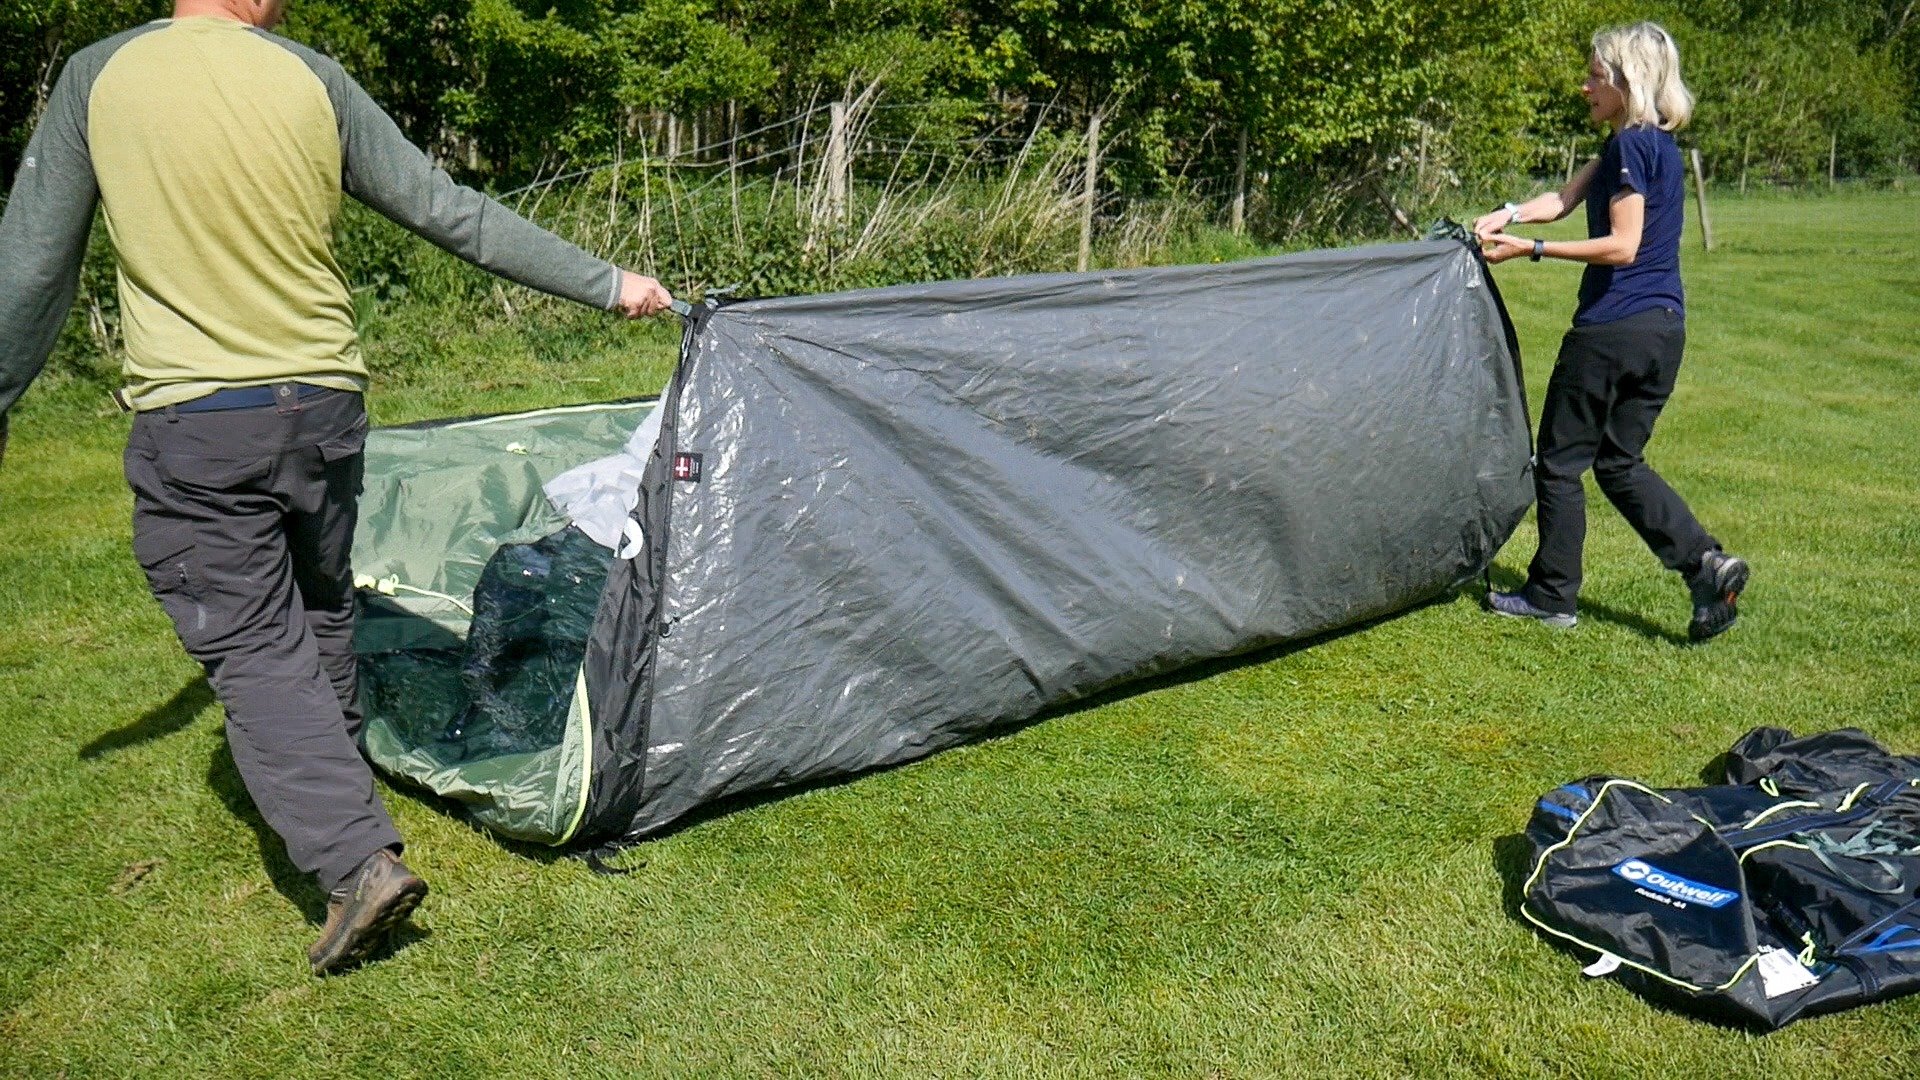 Folding the tent